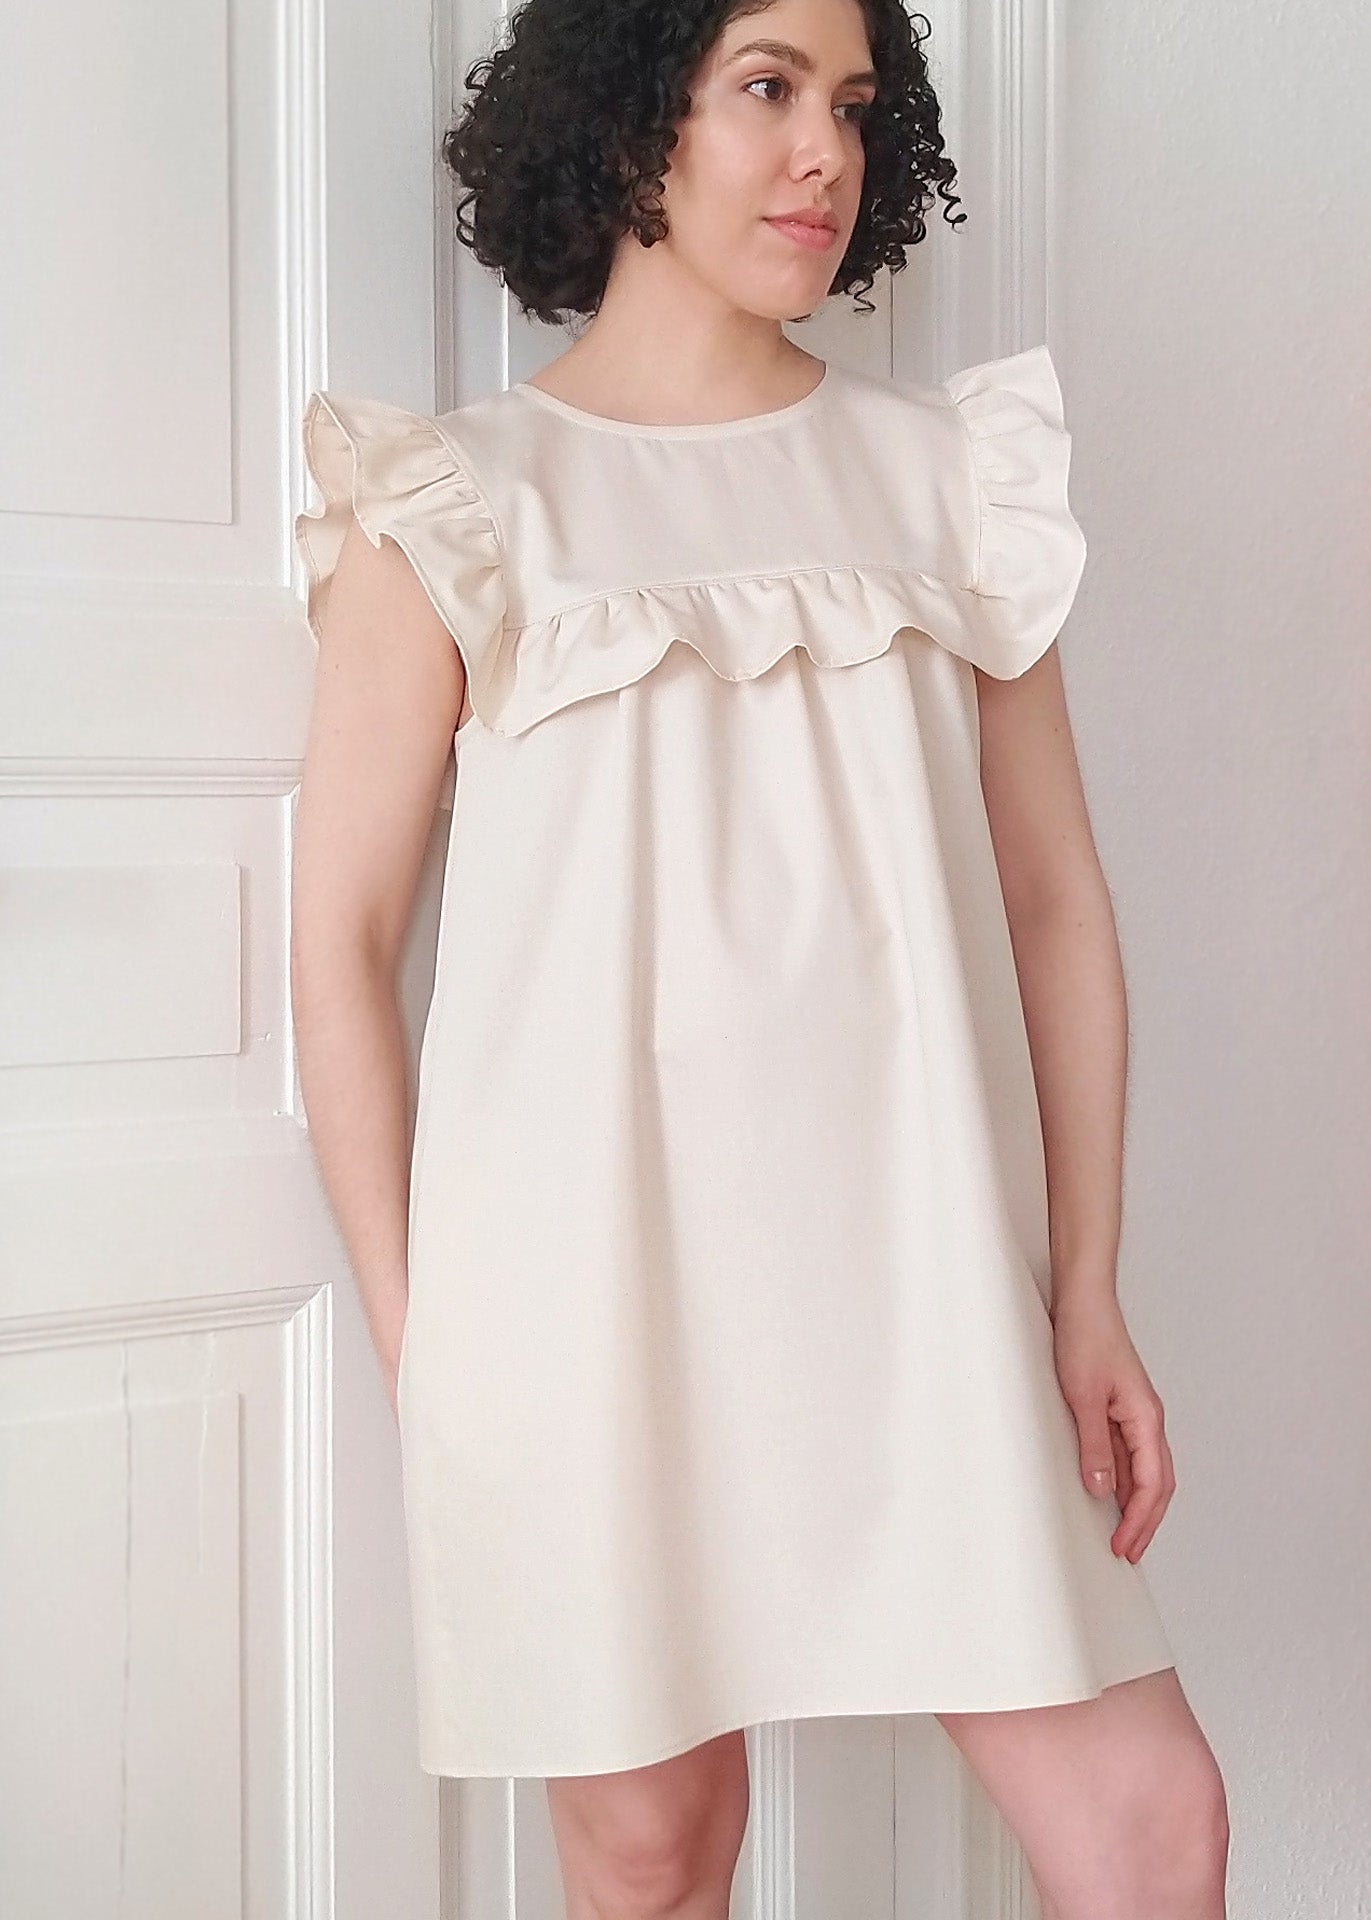 Hana – Ruffle Mini Dress in Ecru